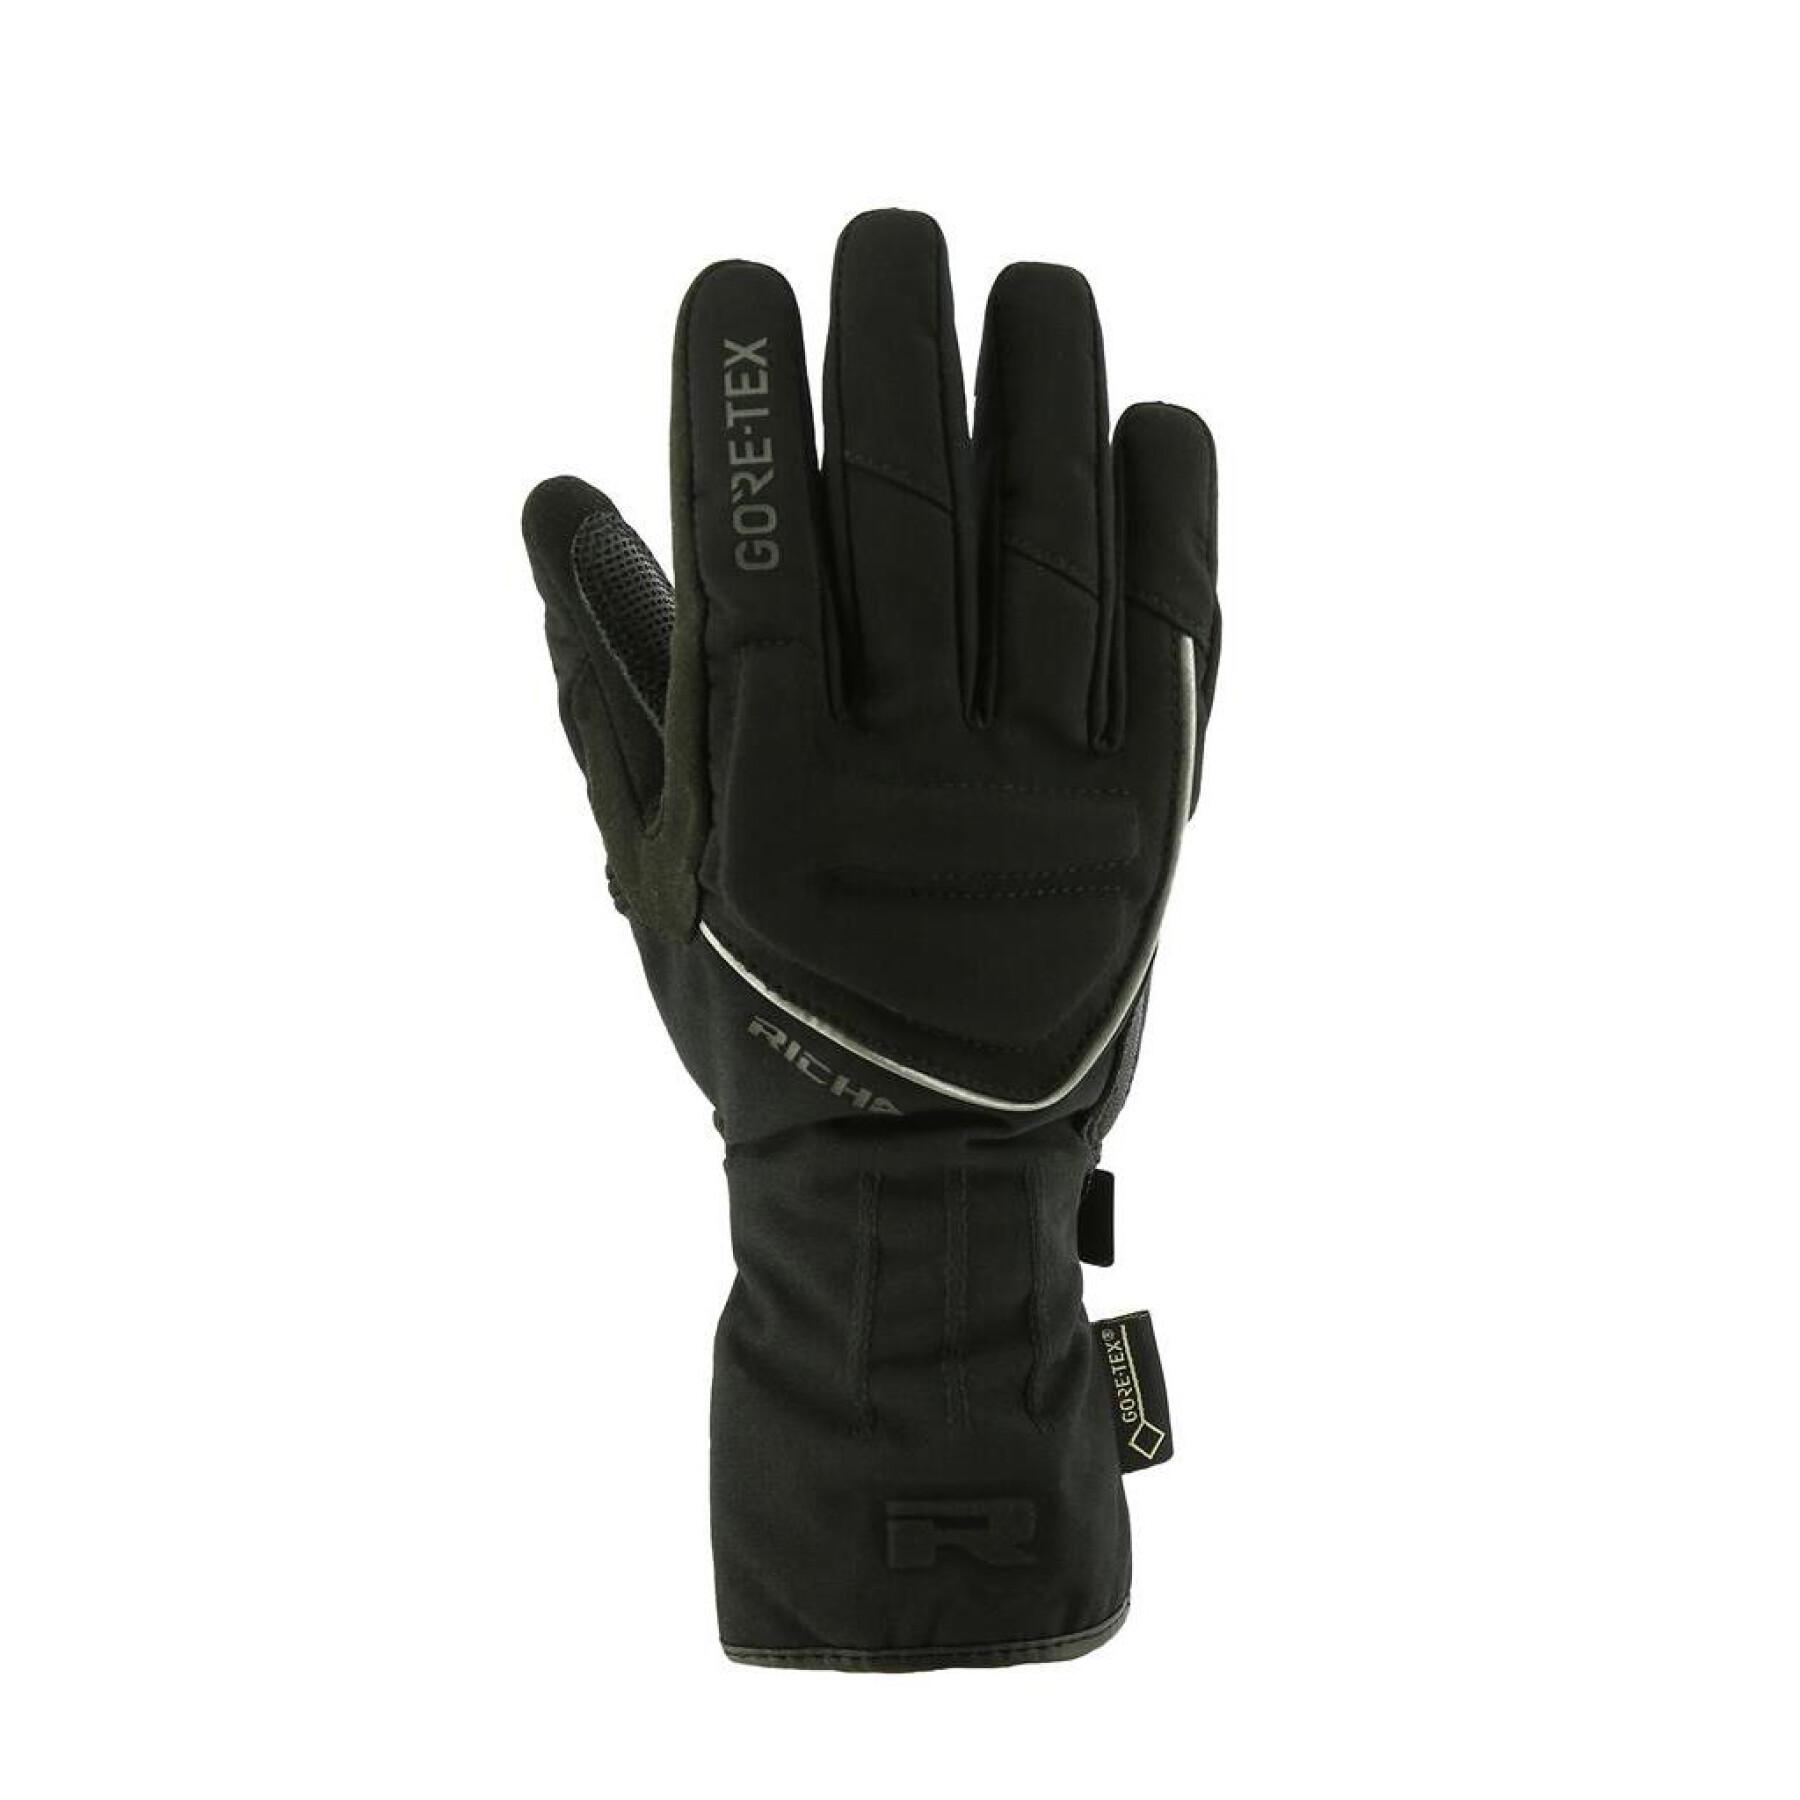 Richa Invader Gore-Tex women's winter motorcycle gloves